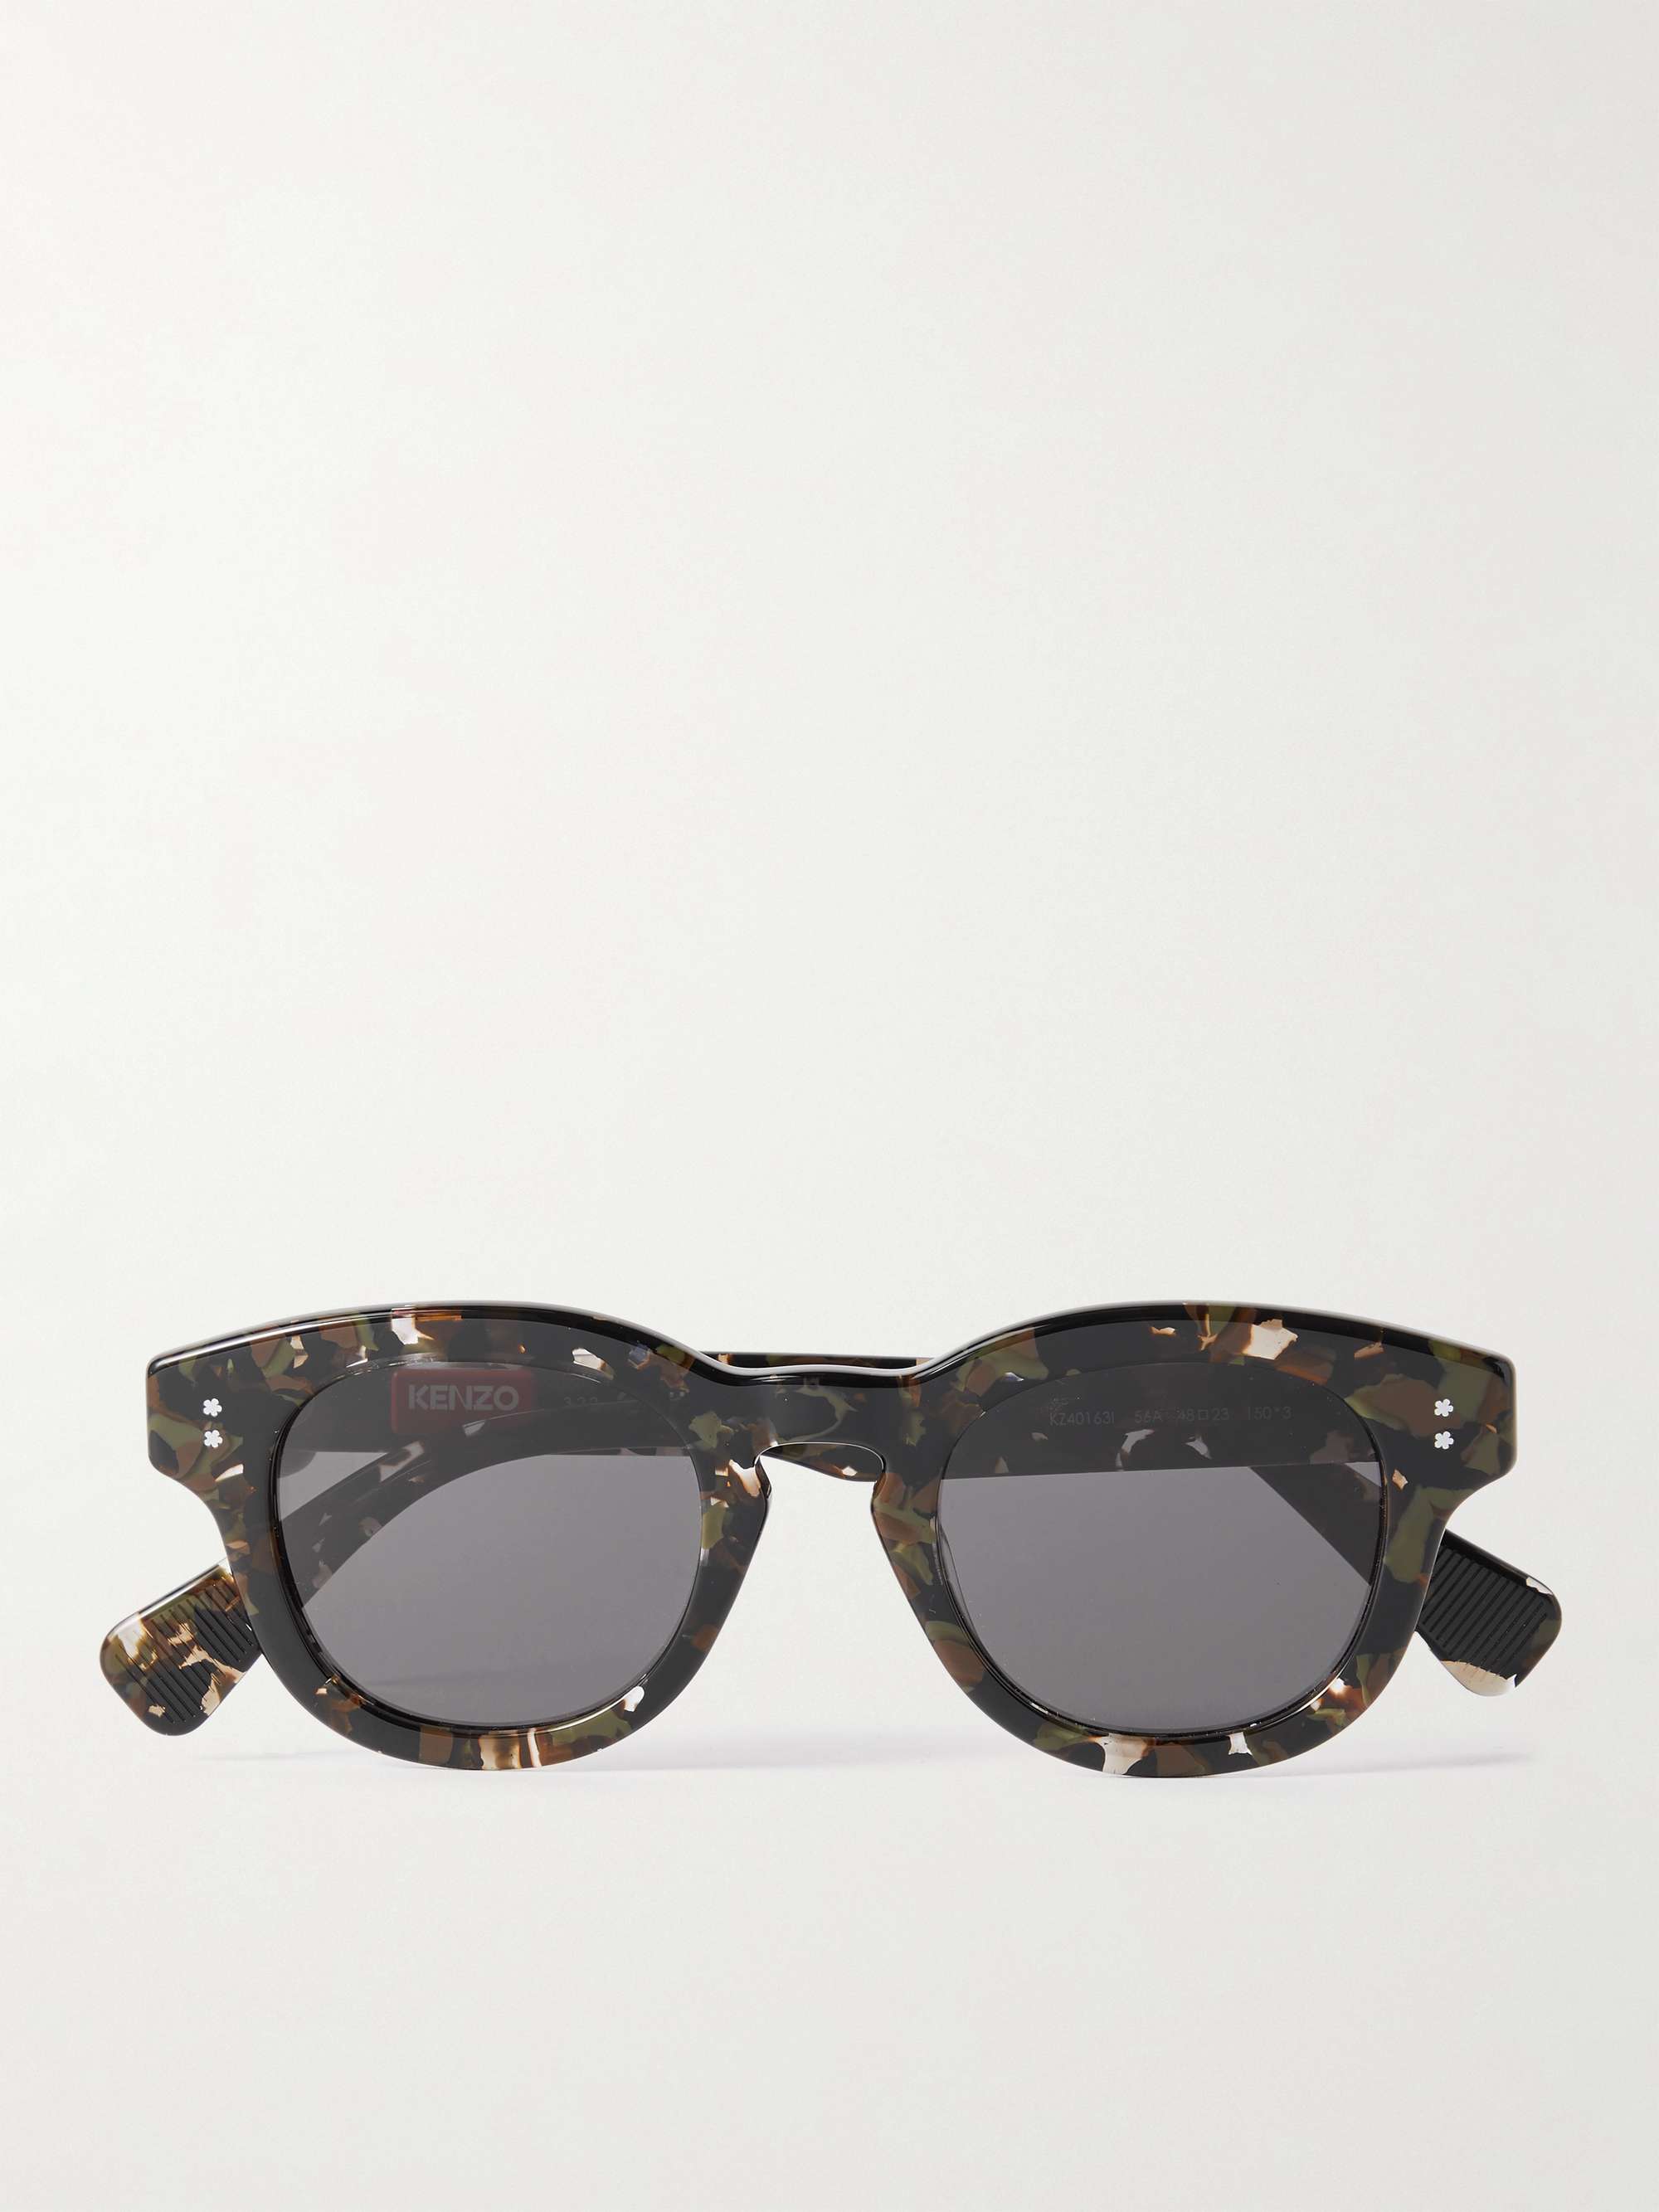 KENZO Round-Frame Tortoiseshell Acetate Sunglasses | MR PORTER